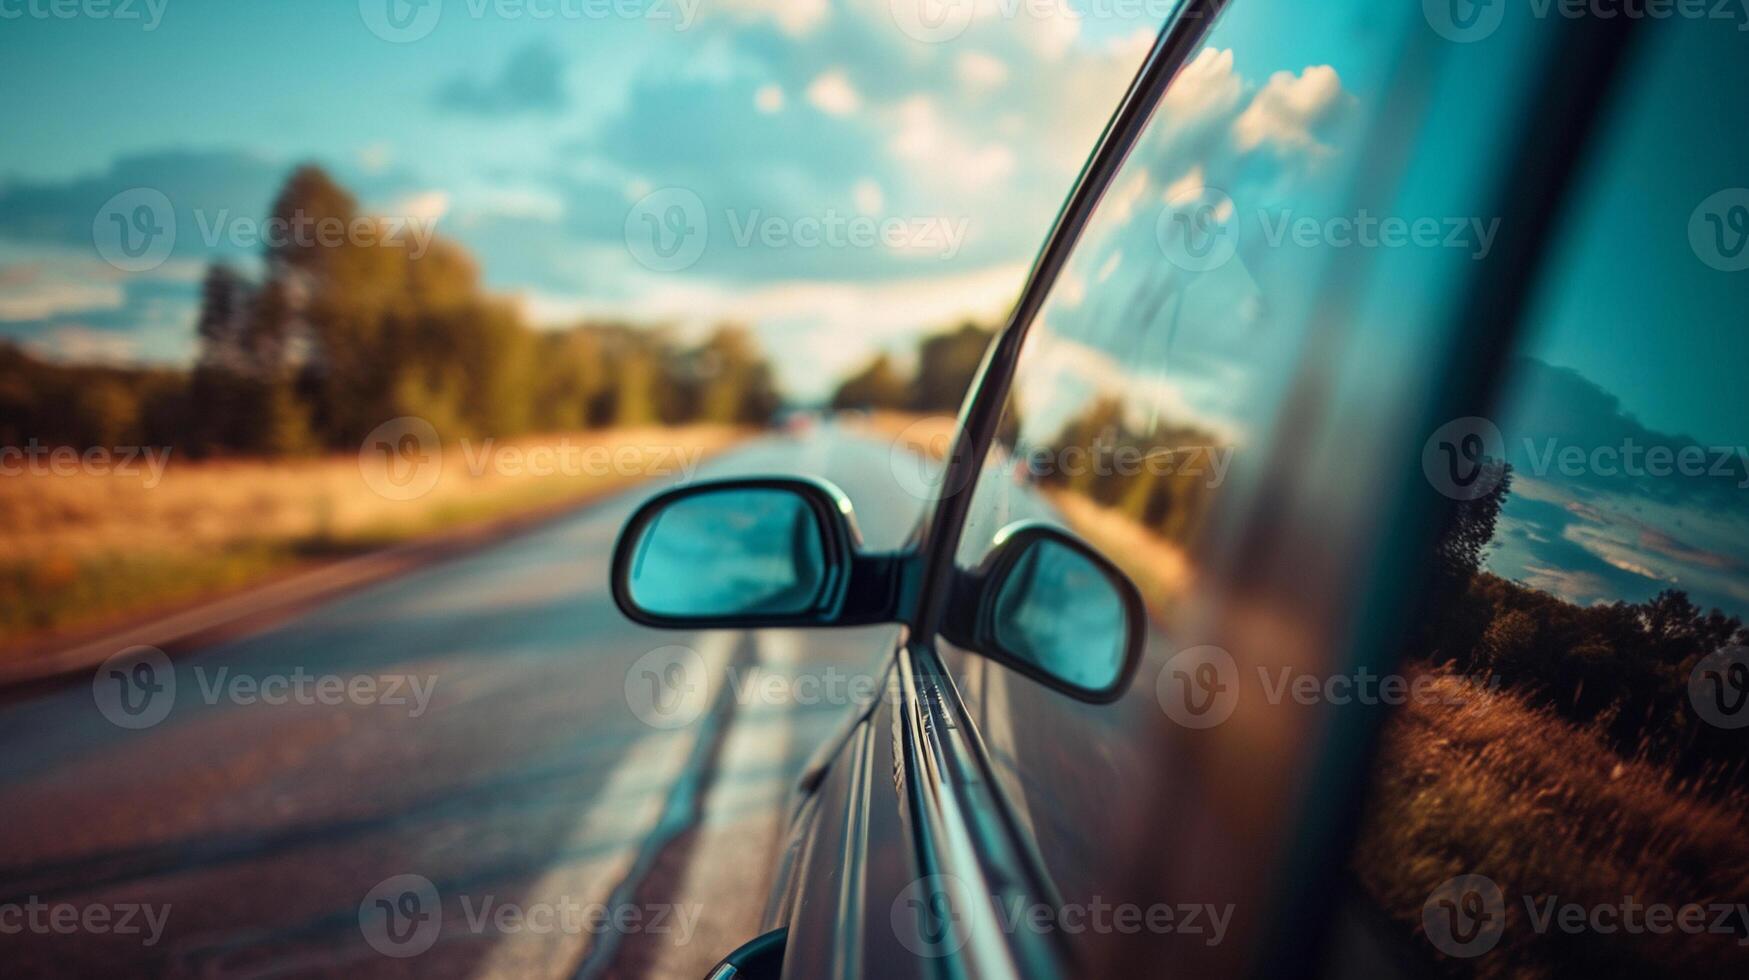 AI generated Road Trip Vibes, background image generative AI photo